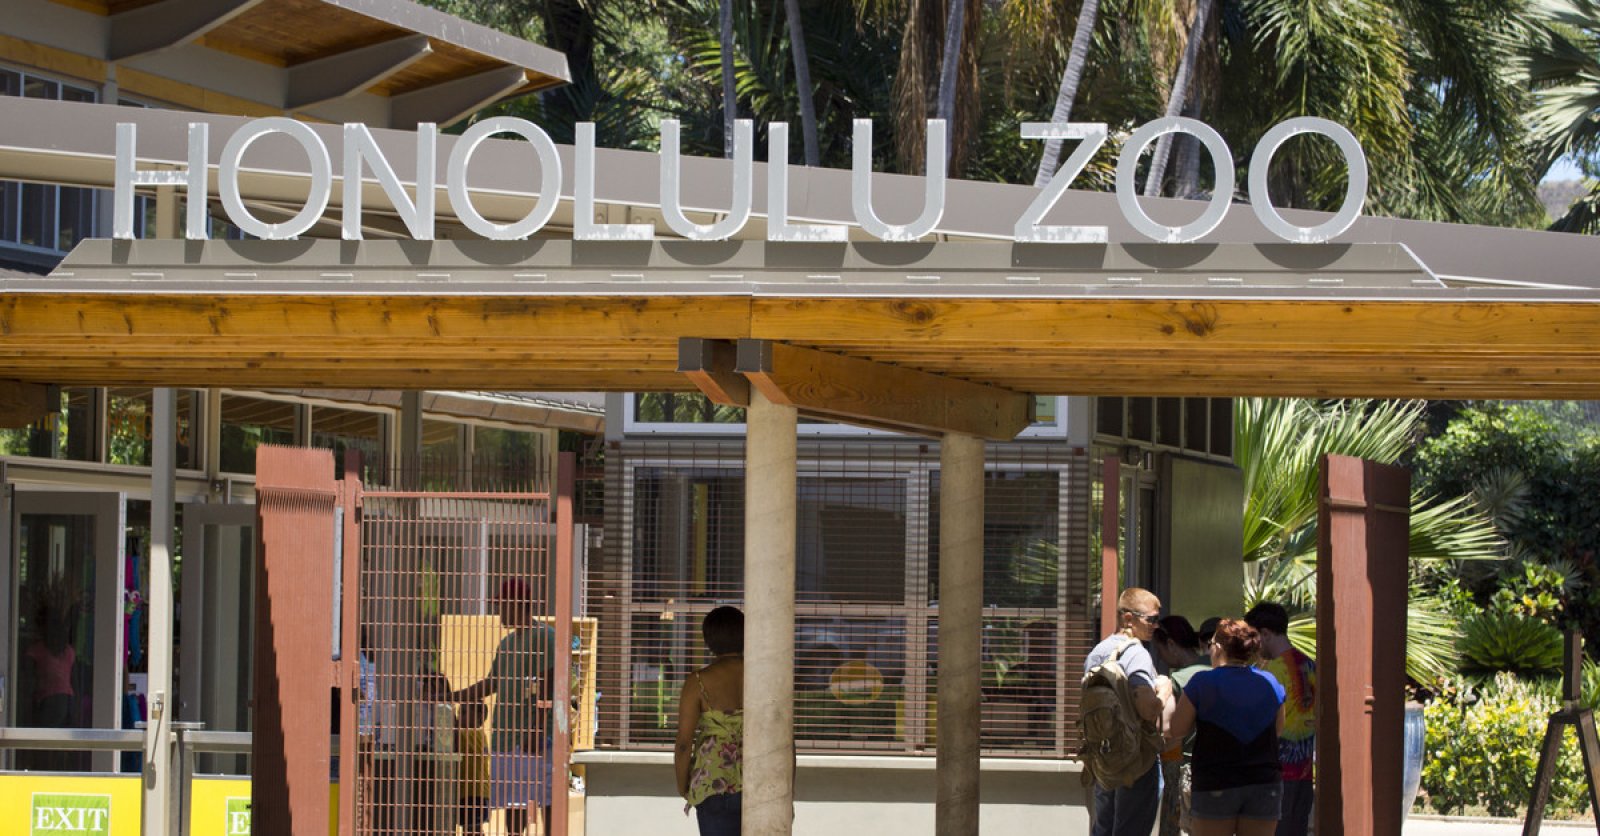 honolulu zoo private tour